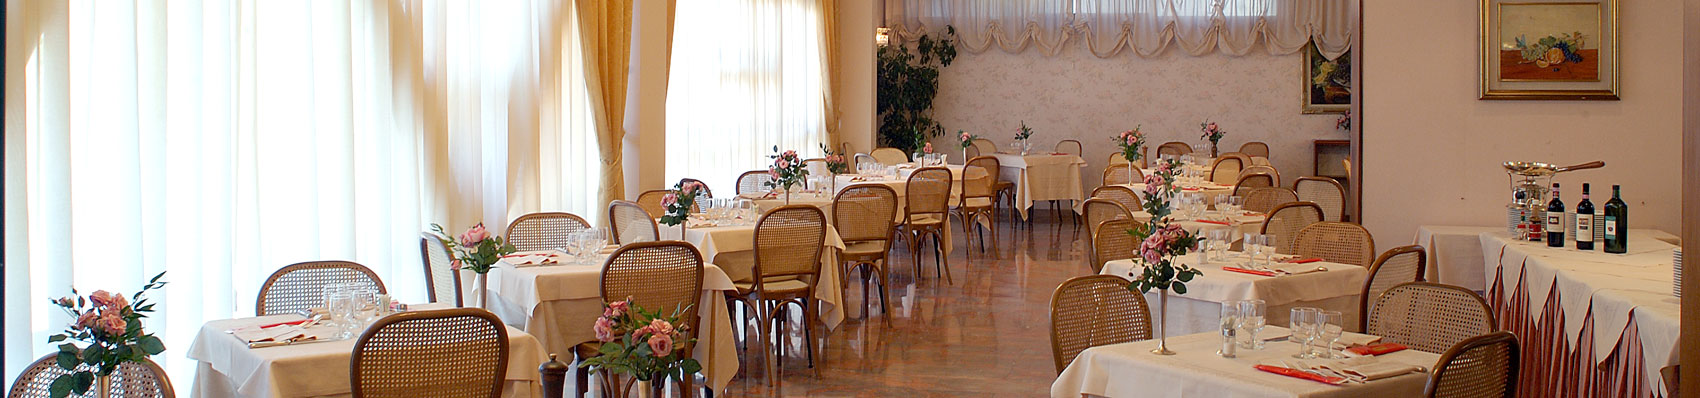 Hôtel Torretta Restaurant Montecatini Terme